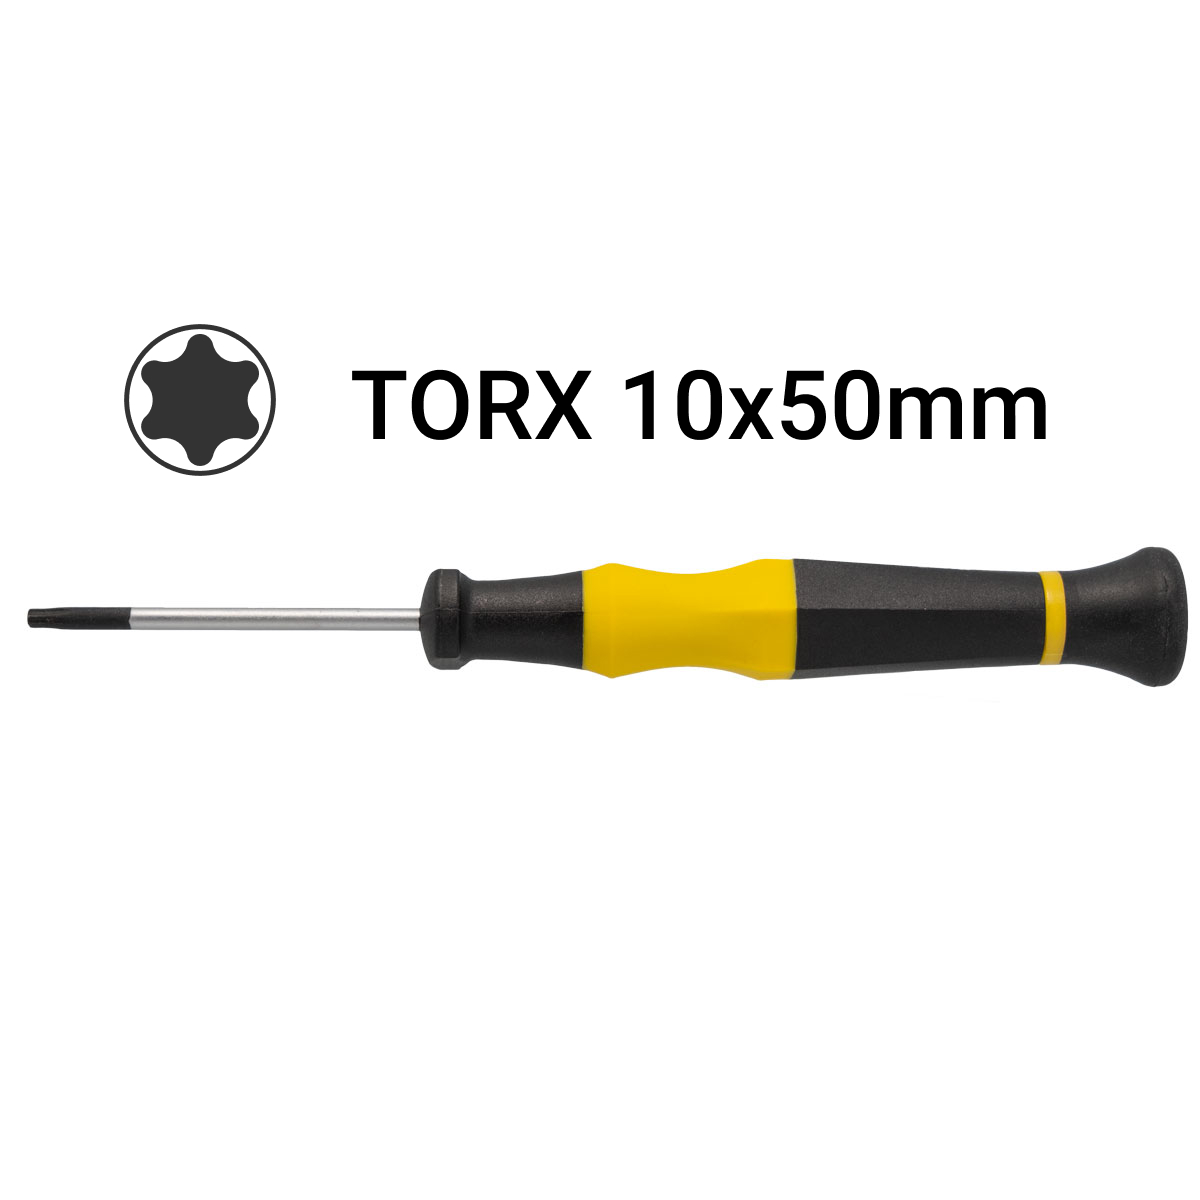 T10x50mm. Torx Precision Screwdriver